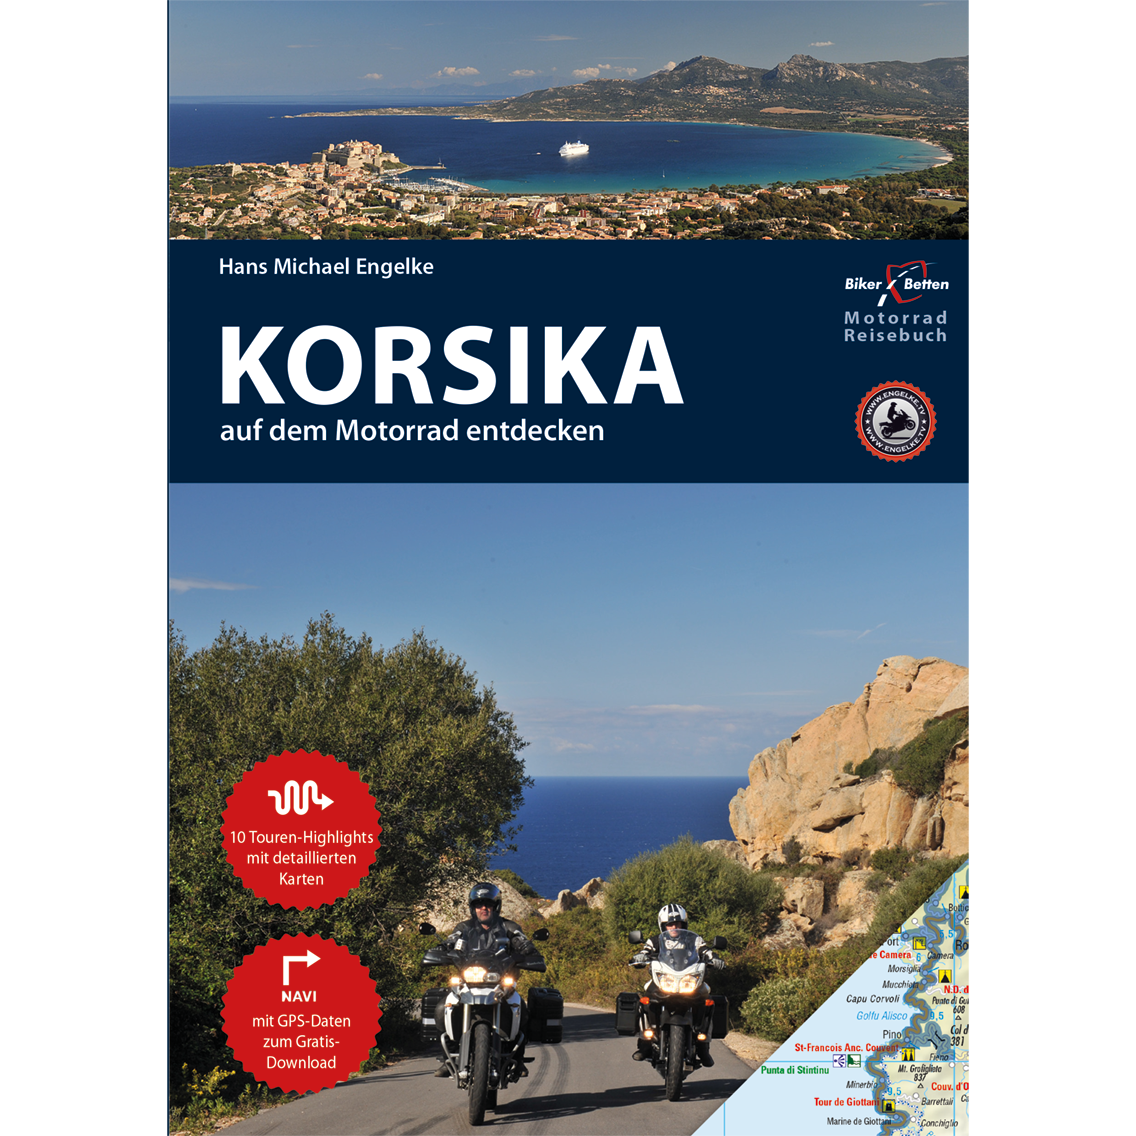 Titel-Korsika-web